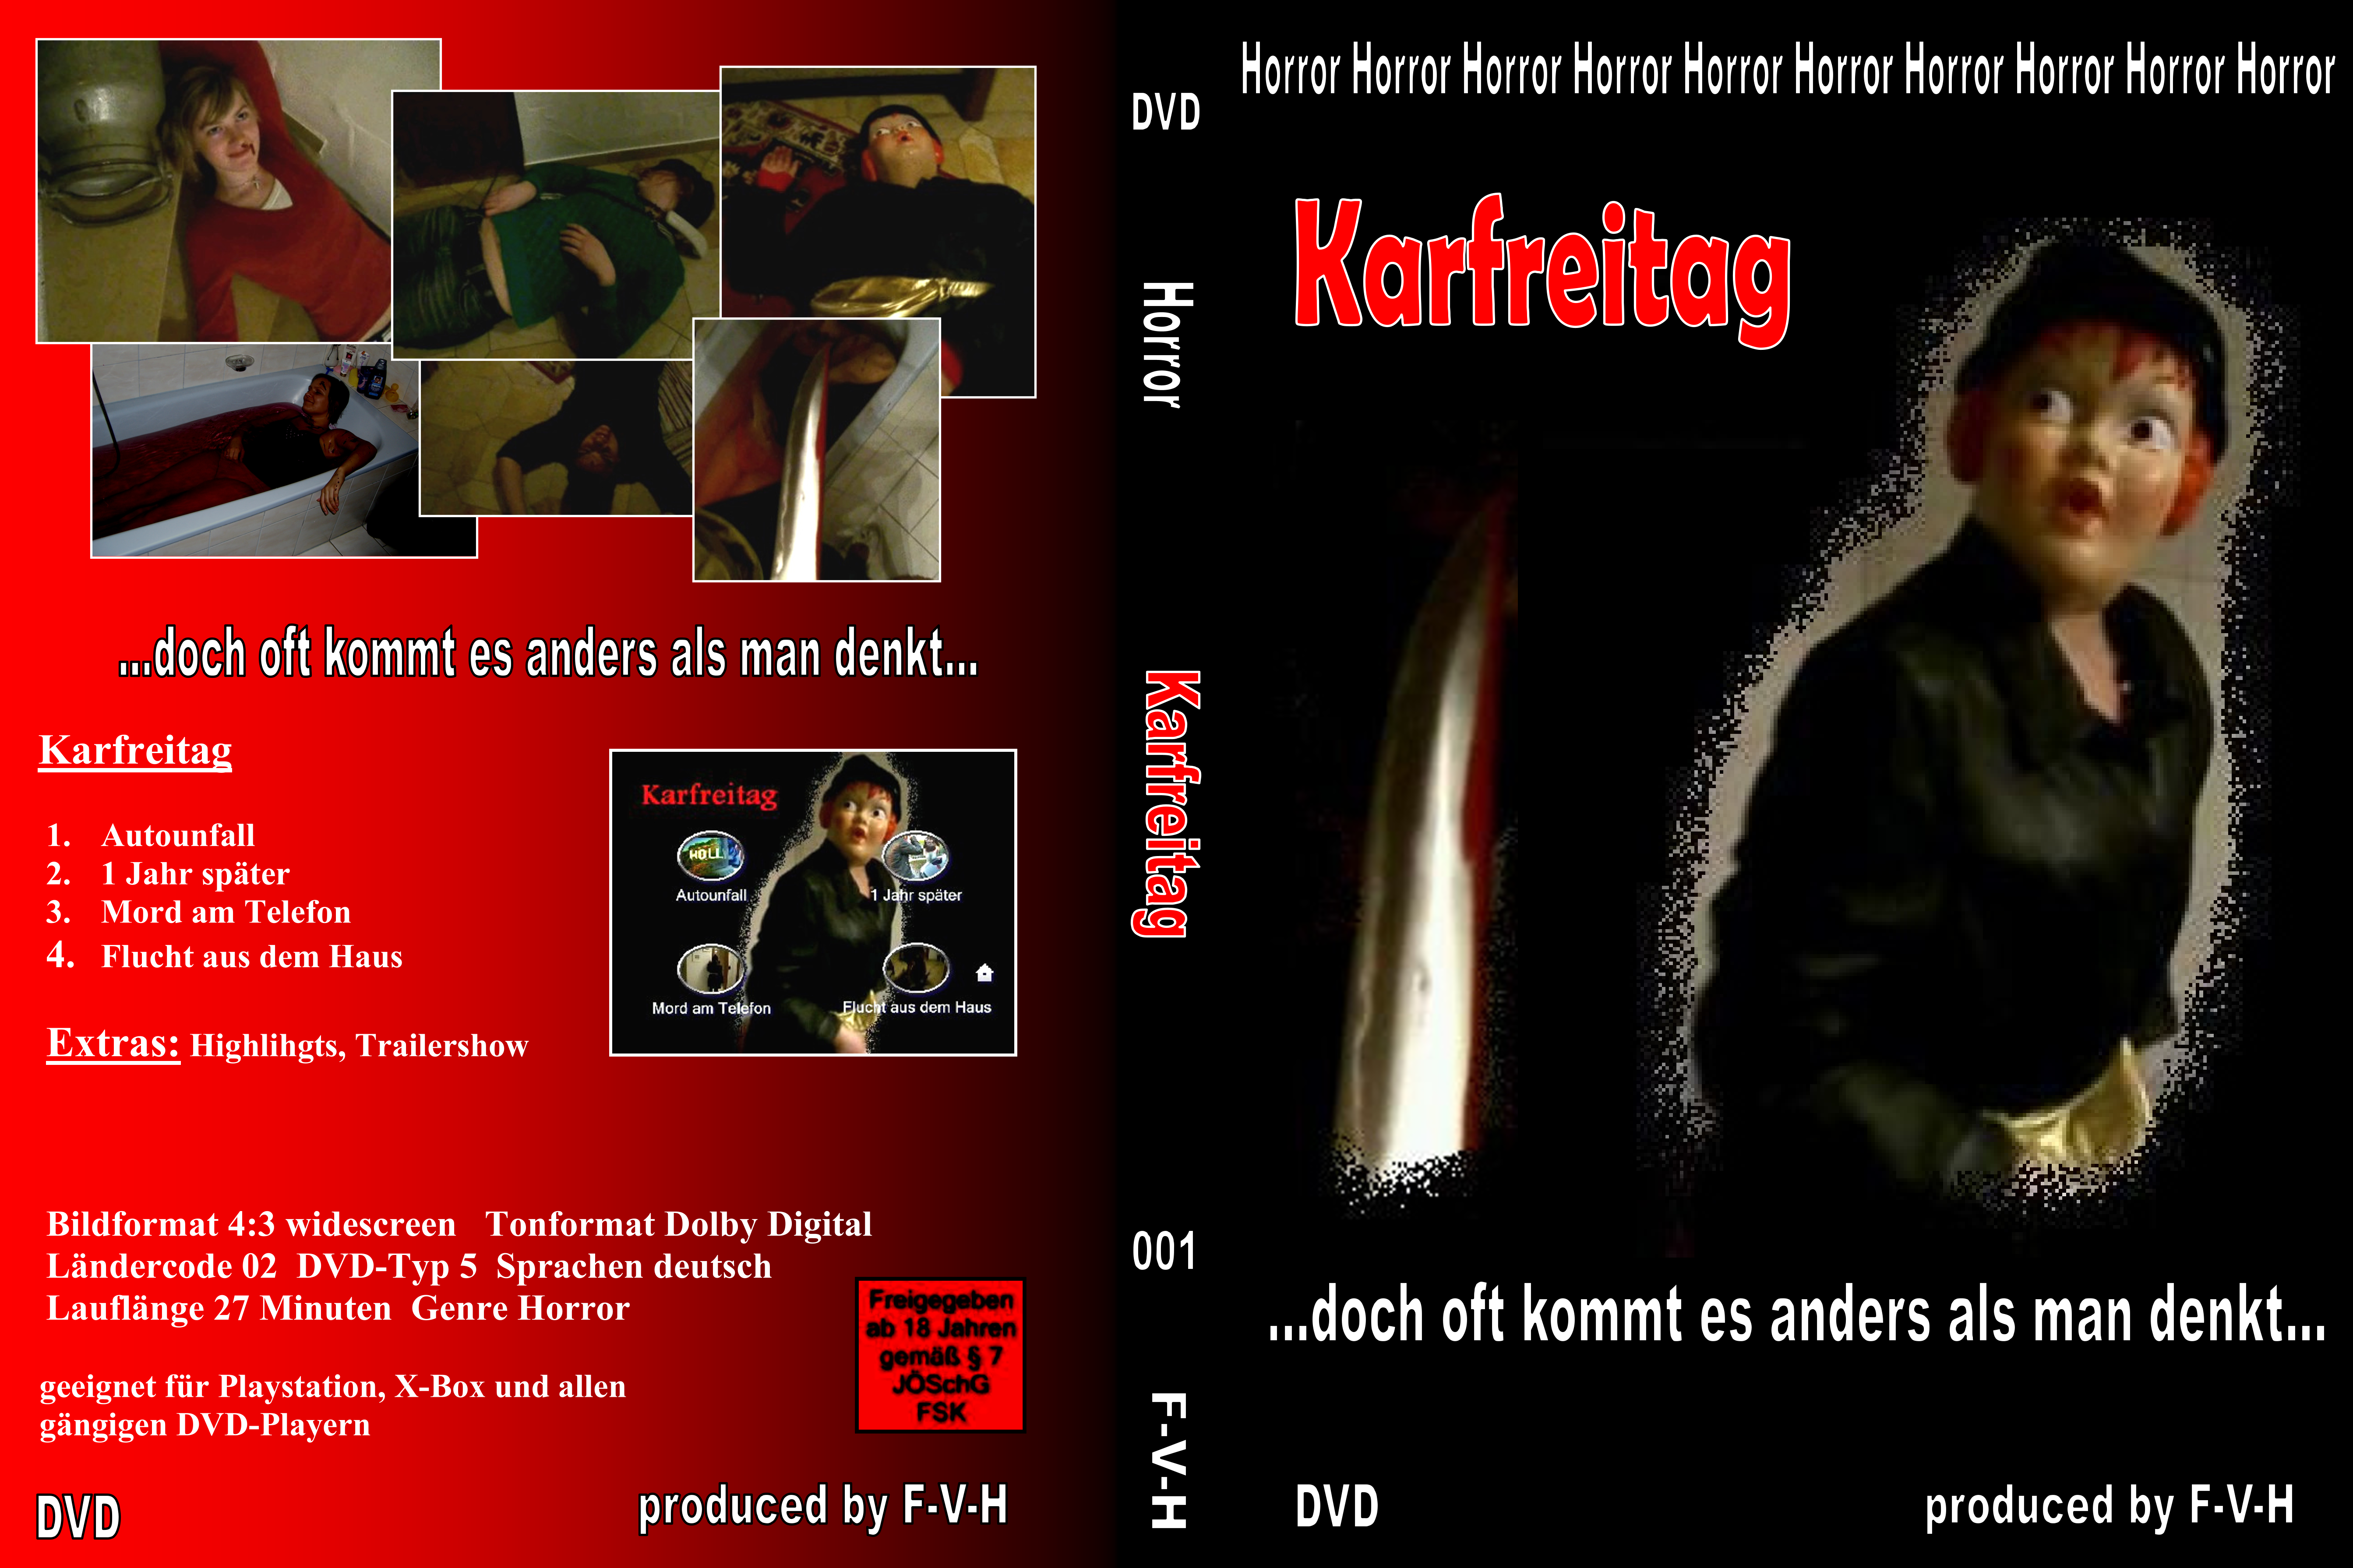 DVD 06